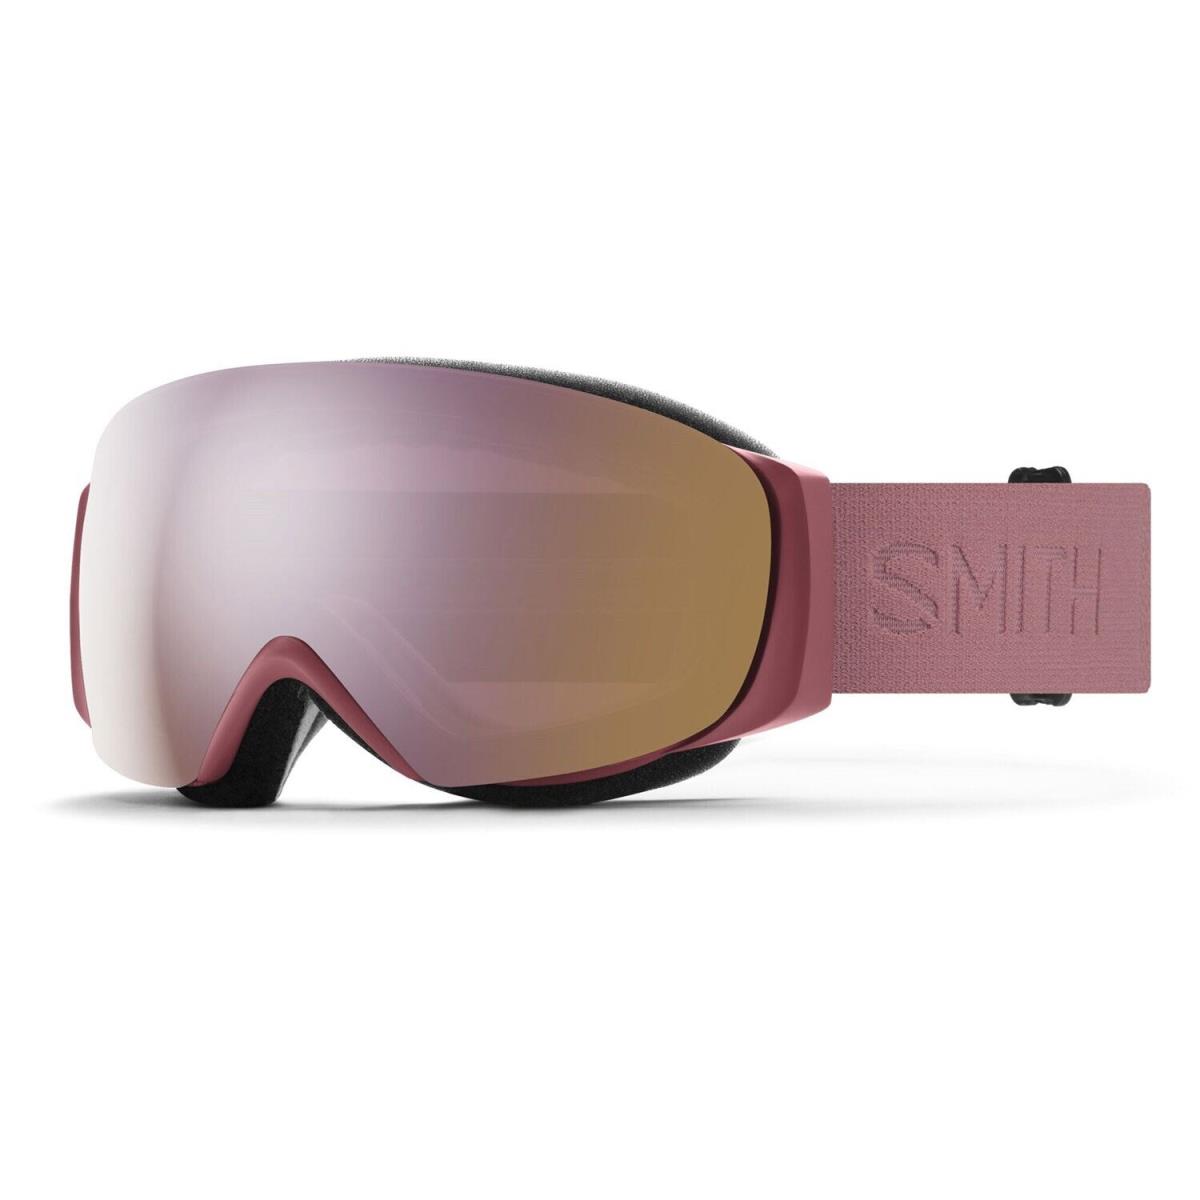 Smith I/o Mag S Ski / Snow Goggles Chalk Rose Everyday Rose Gold Mirror + Bonus